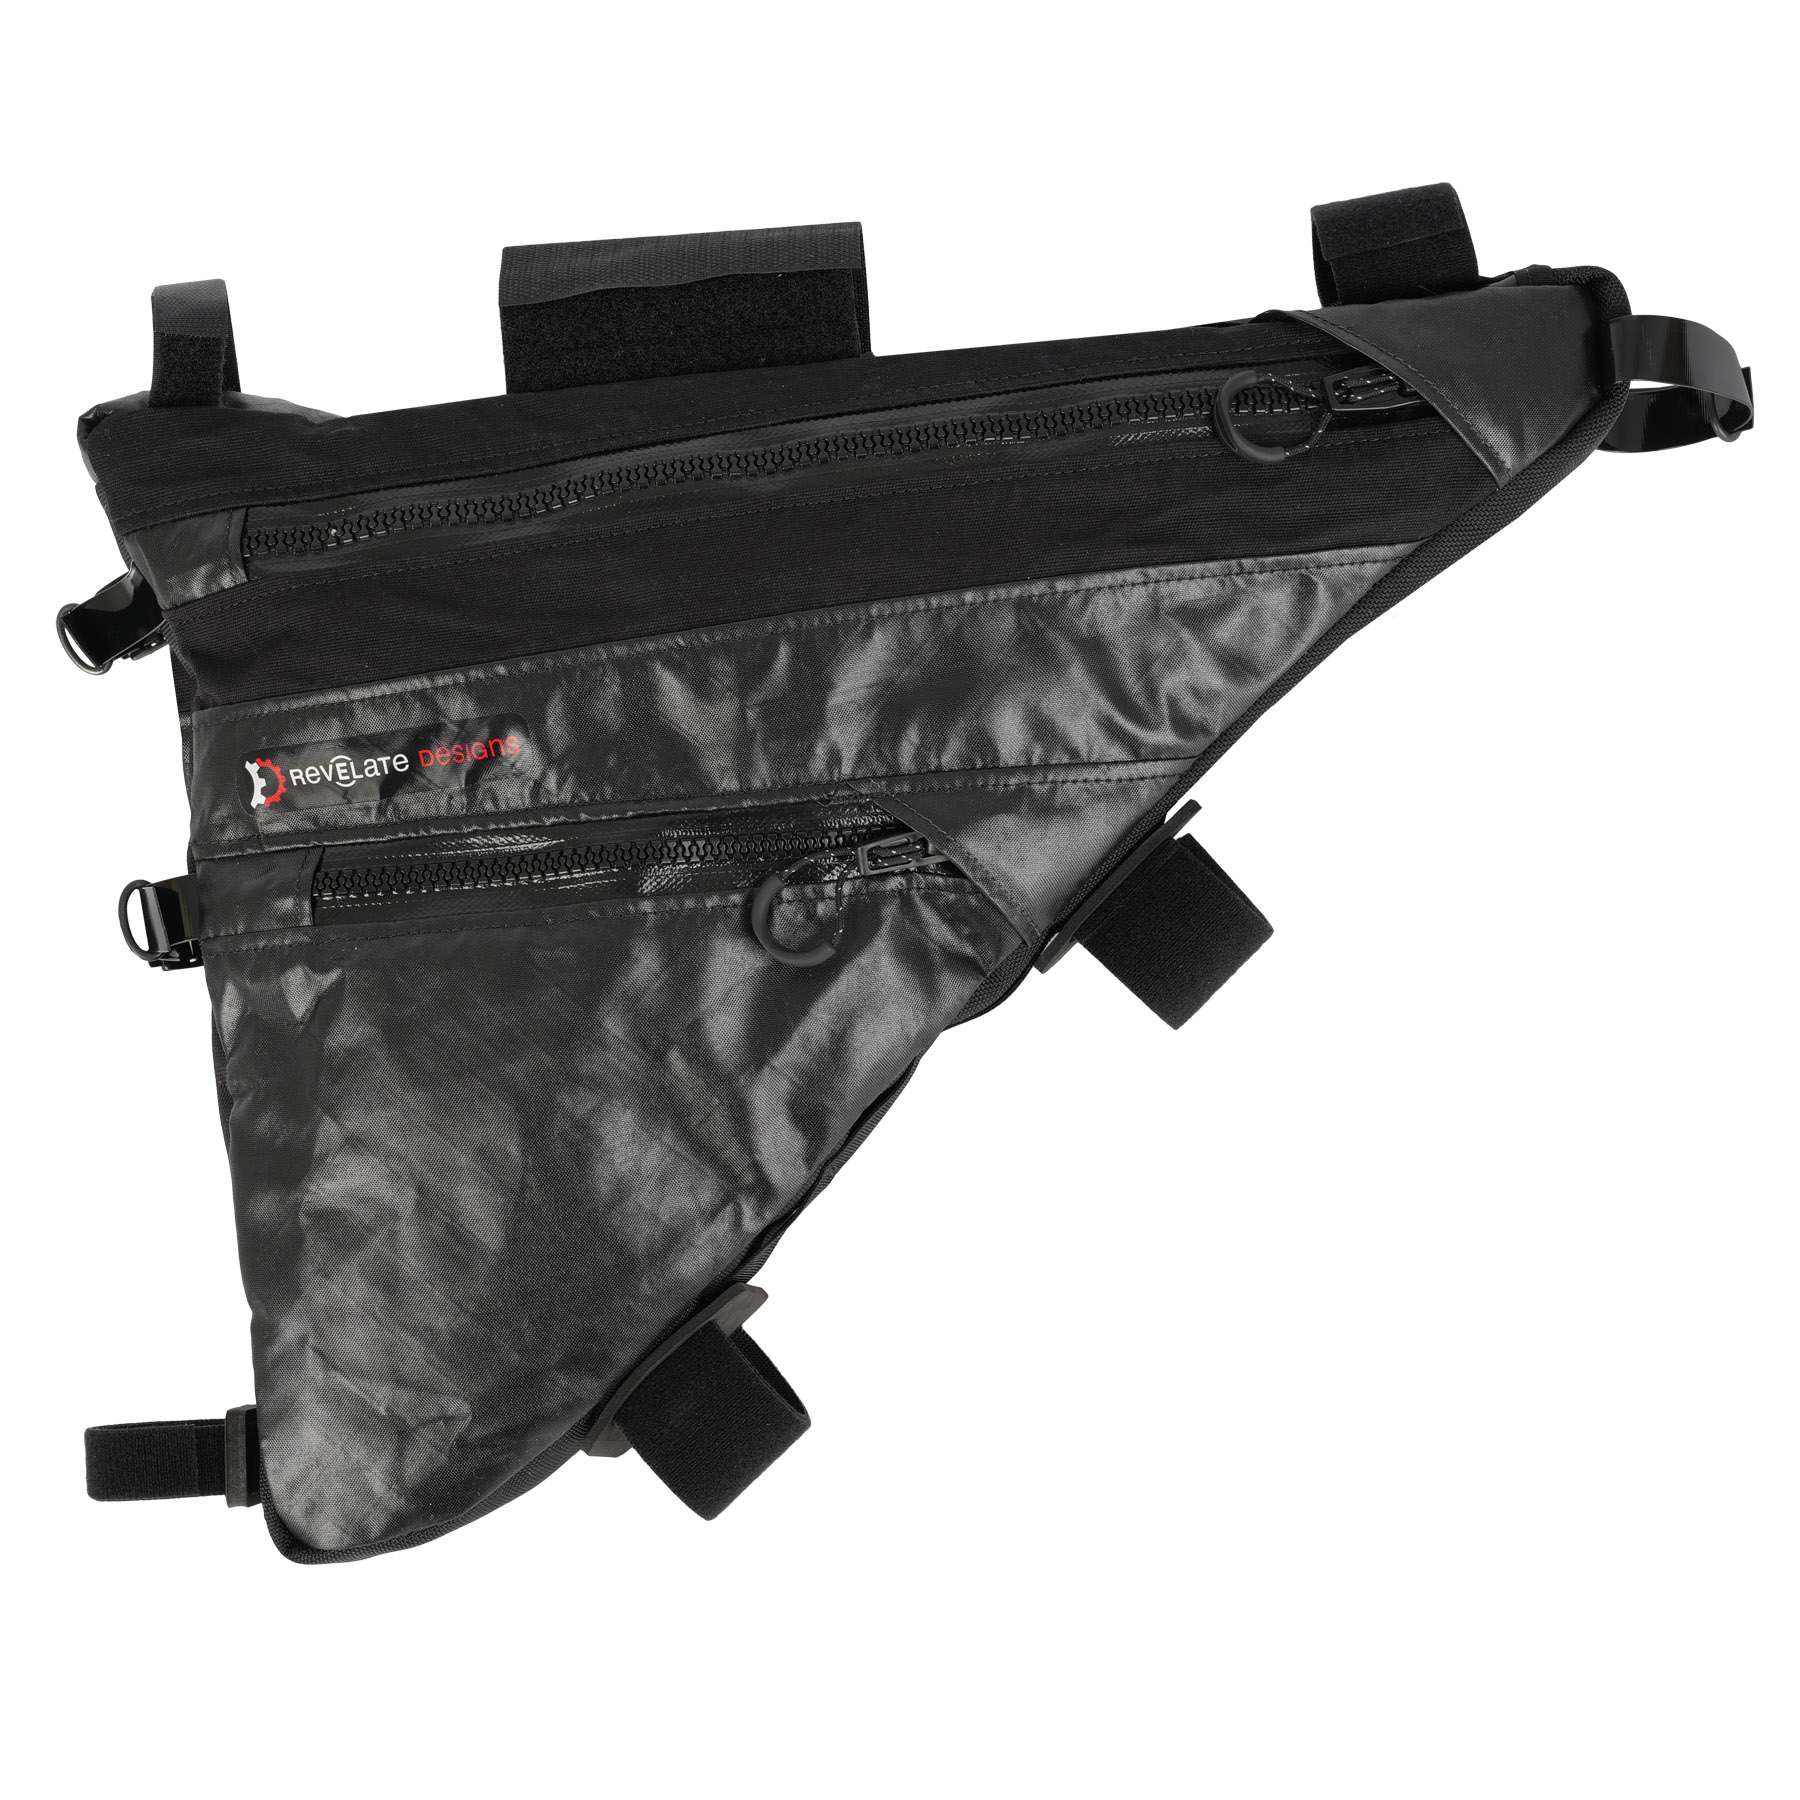 Picture of Revelate Designs Ripio EcoPac Frame Bag - 5L - black - S